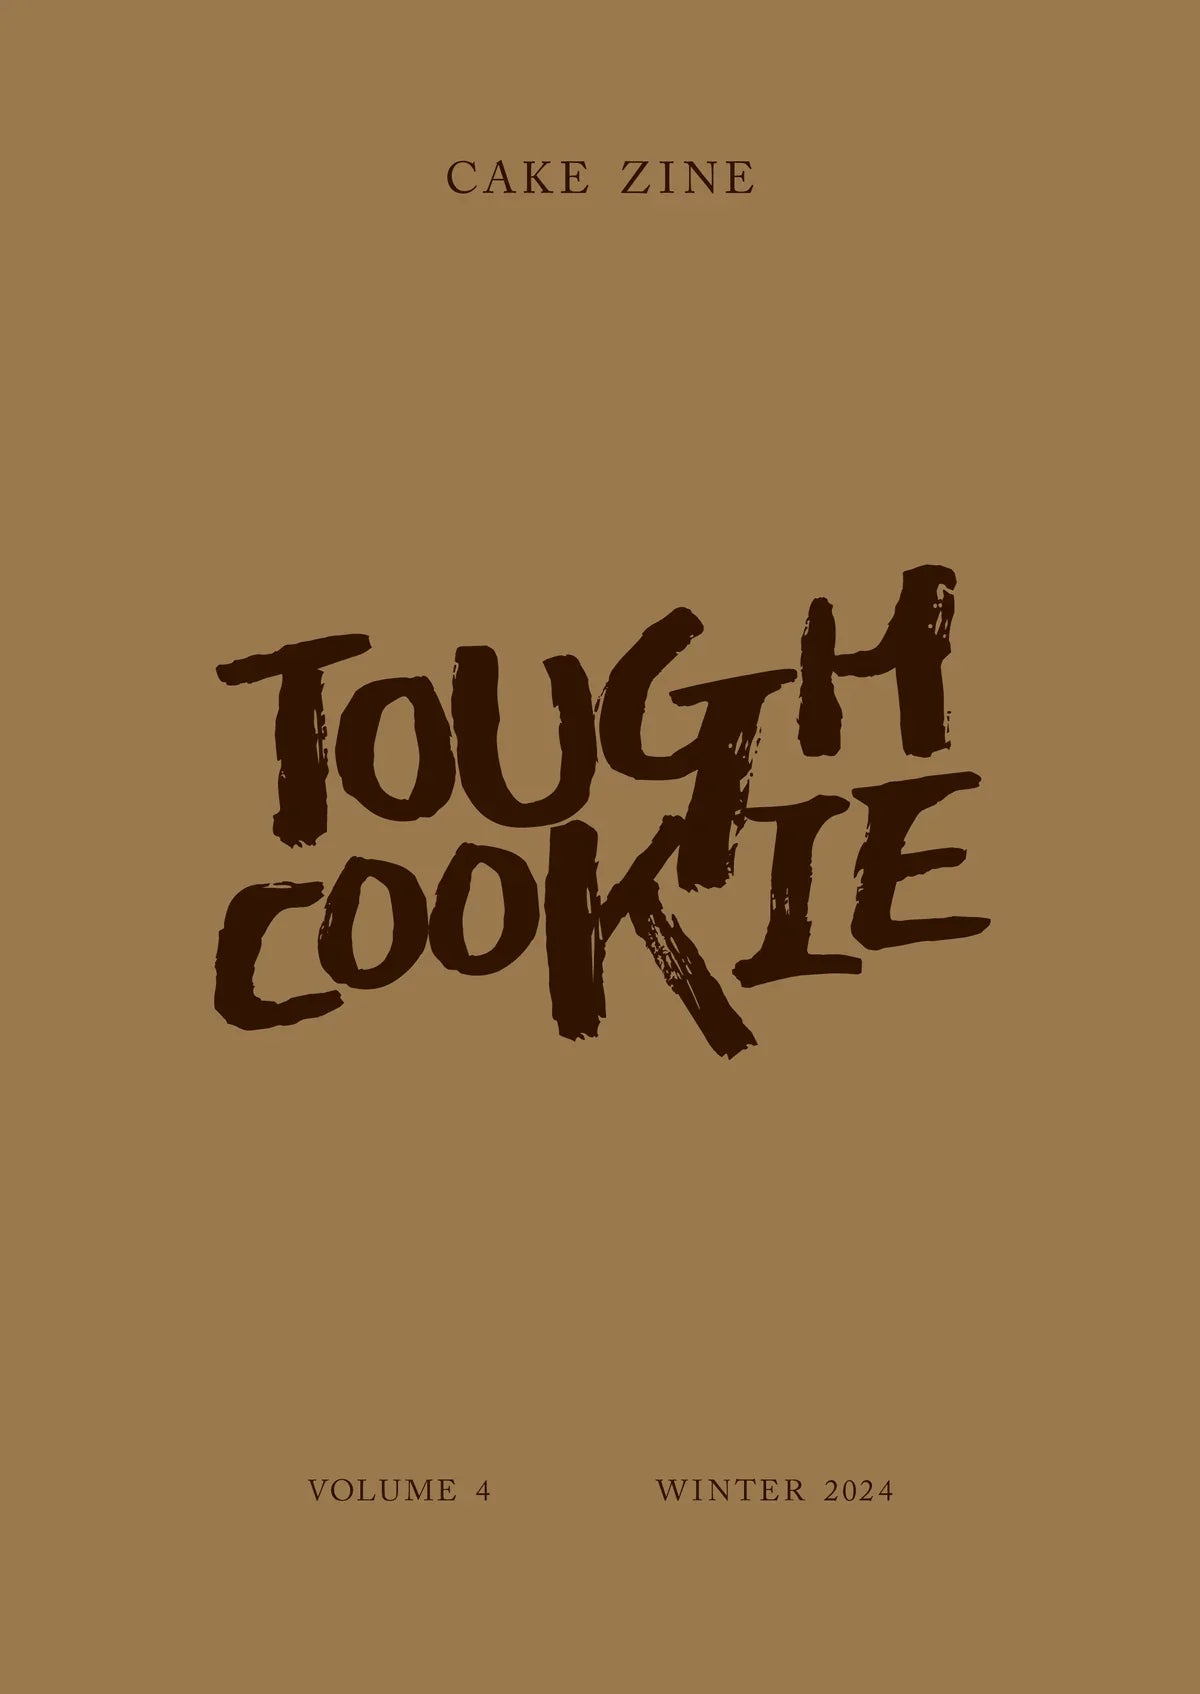 Cake Zine #4 Tough Cookie